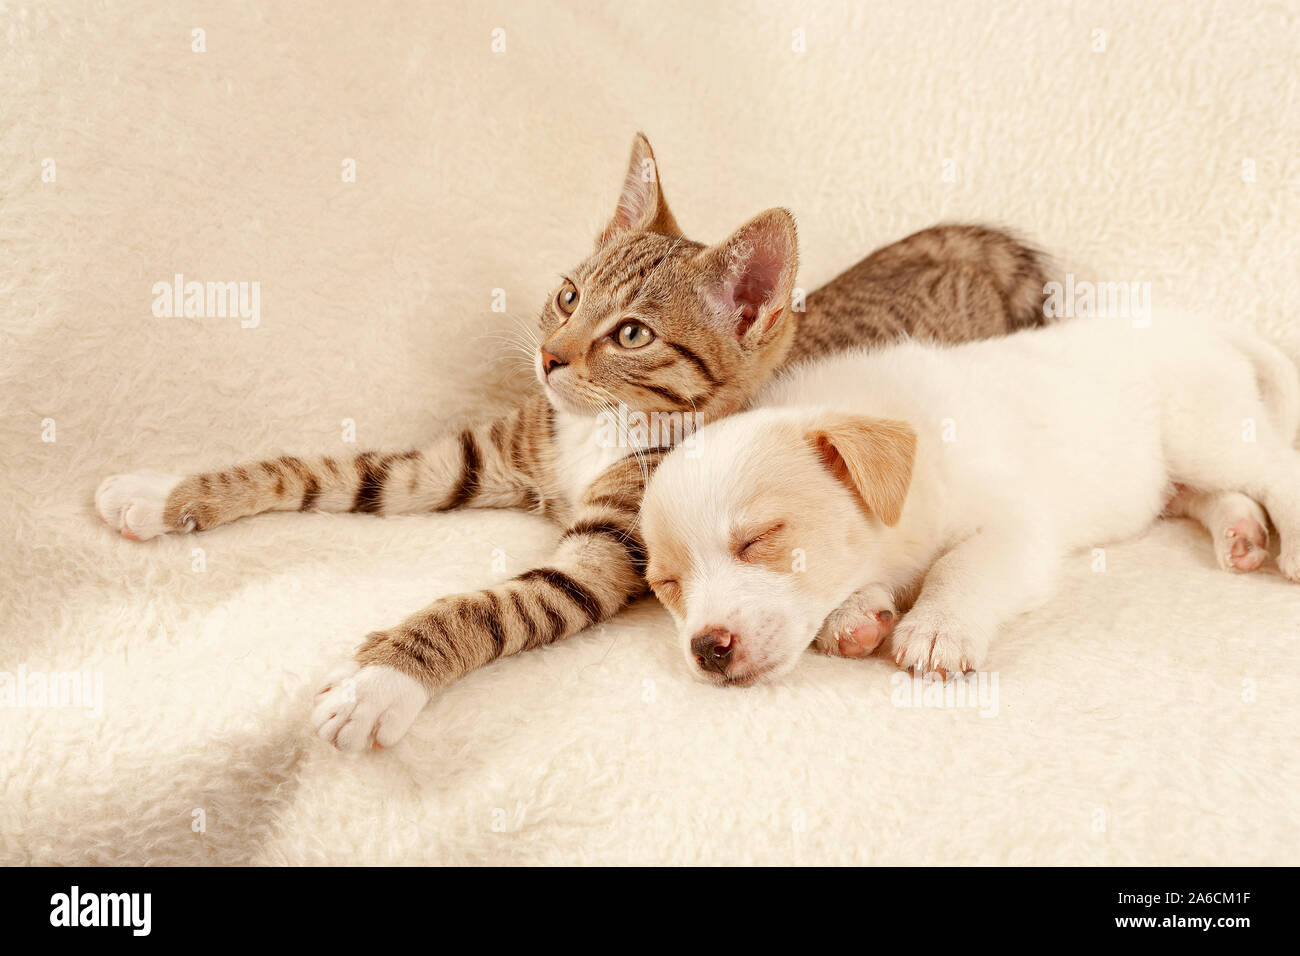 junges Kätzchen und junger Hund liegen friedlich nebeneinander | Portrait of a young kitten and a young pup peacefully lying beside each other. Stock Photo